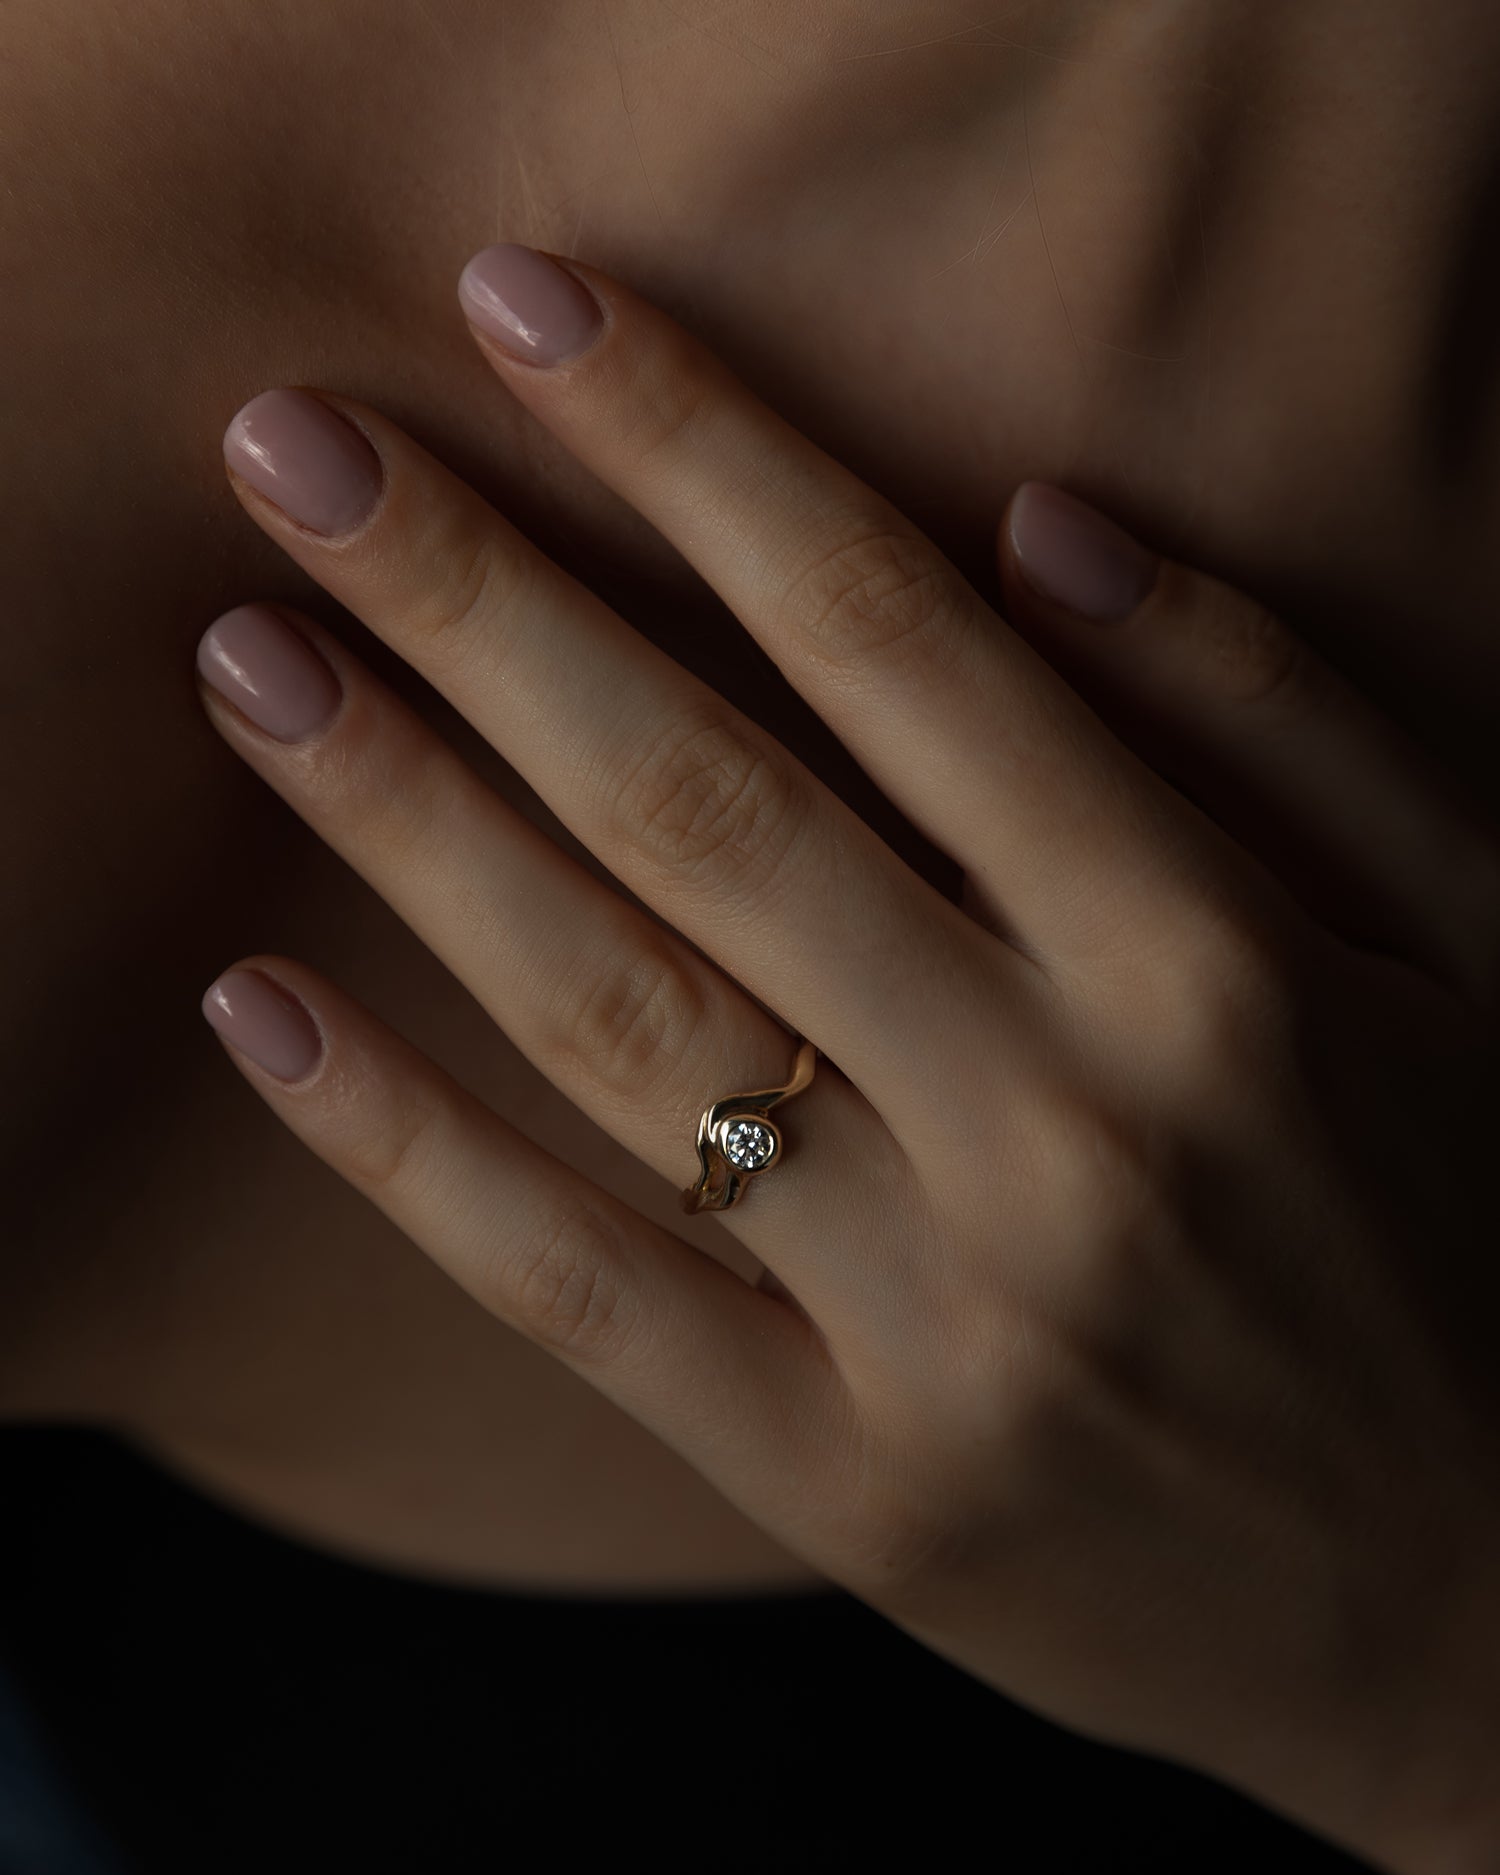 flot model hånd med diamant ring i guld. hånden holder på brystkassen, med sort top.  